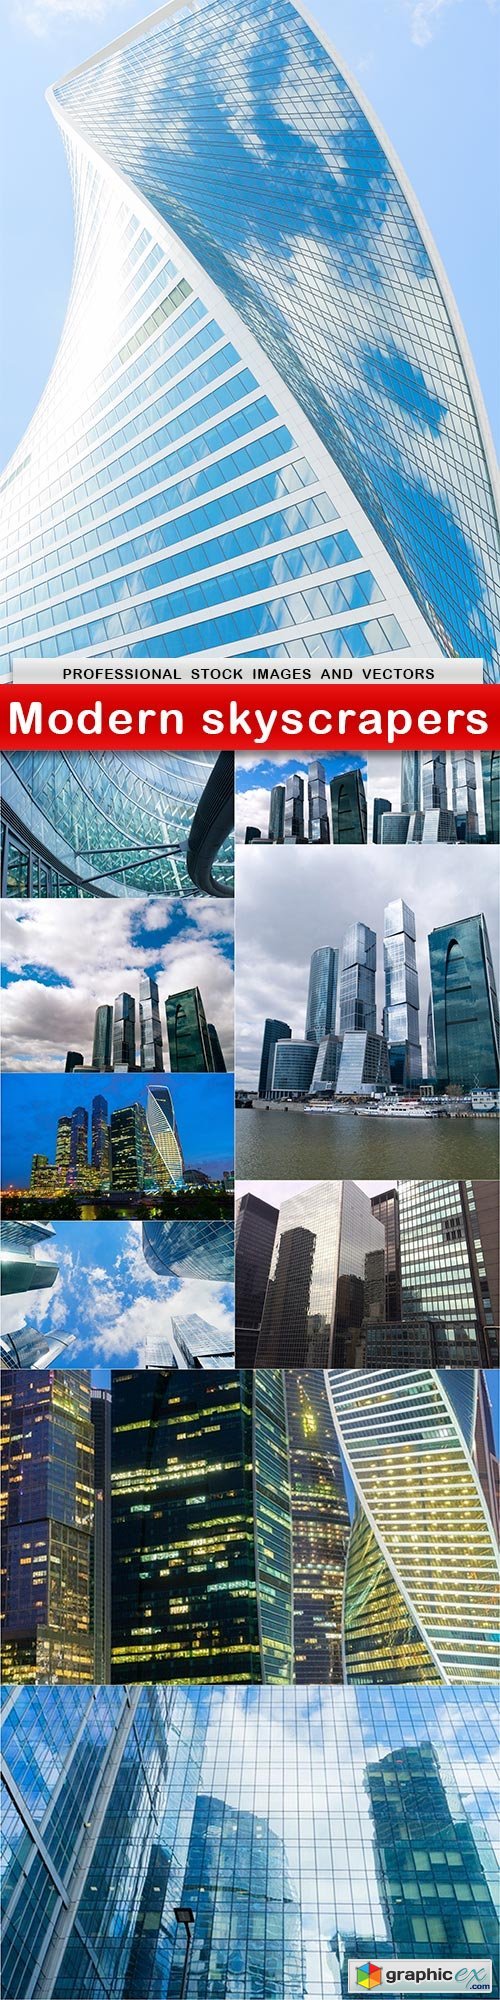 Modern skyscrapers - 11 UHQ JPEG